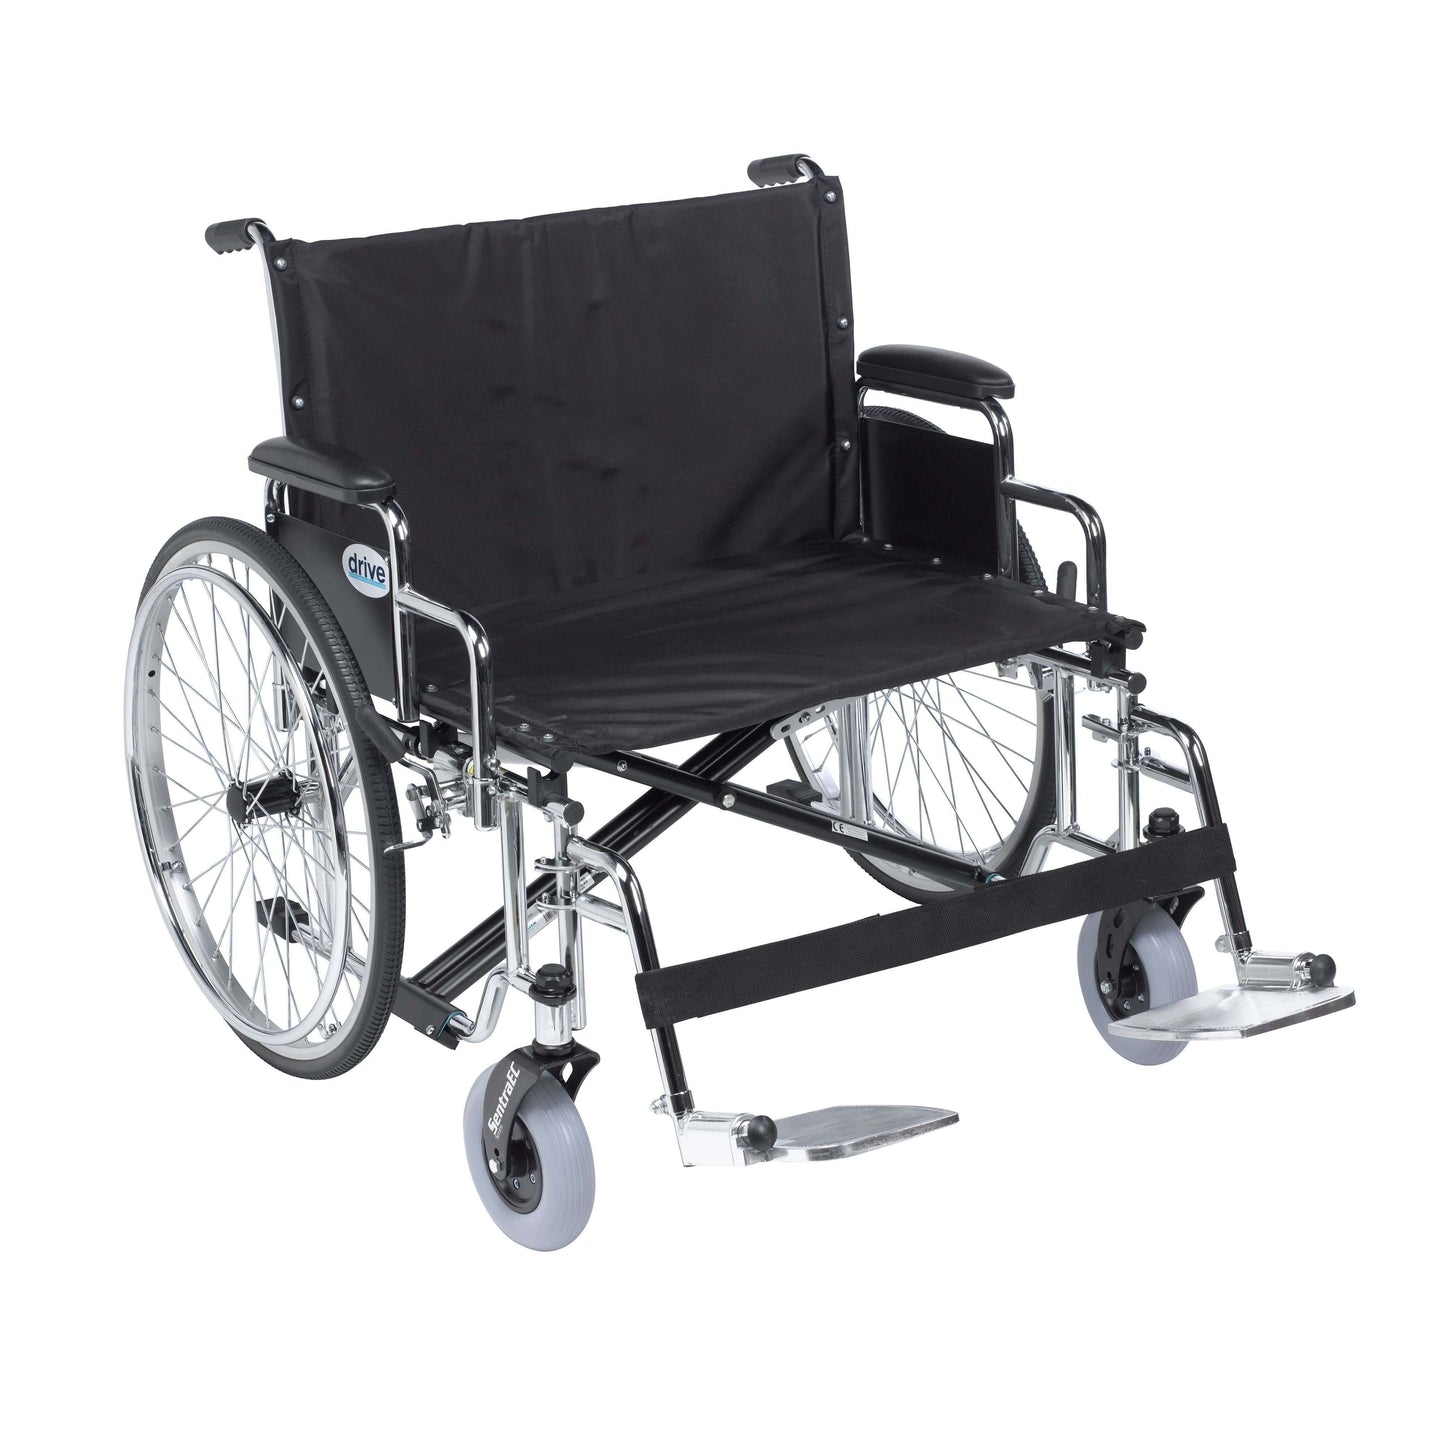 Drive std28ecdda-sf Sentra EC Heavy Duty Extra Wide Wheelchair, Detachable Desk Arms, Swing away Footrests, 28" Seat